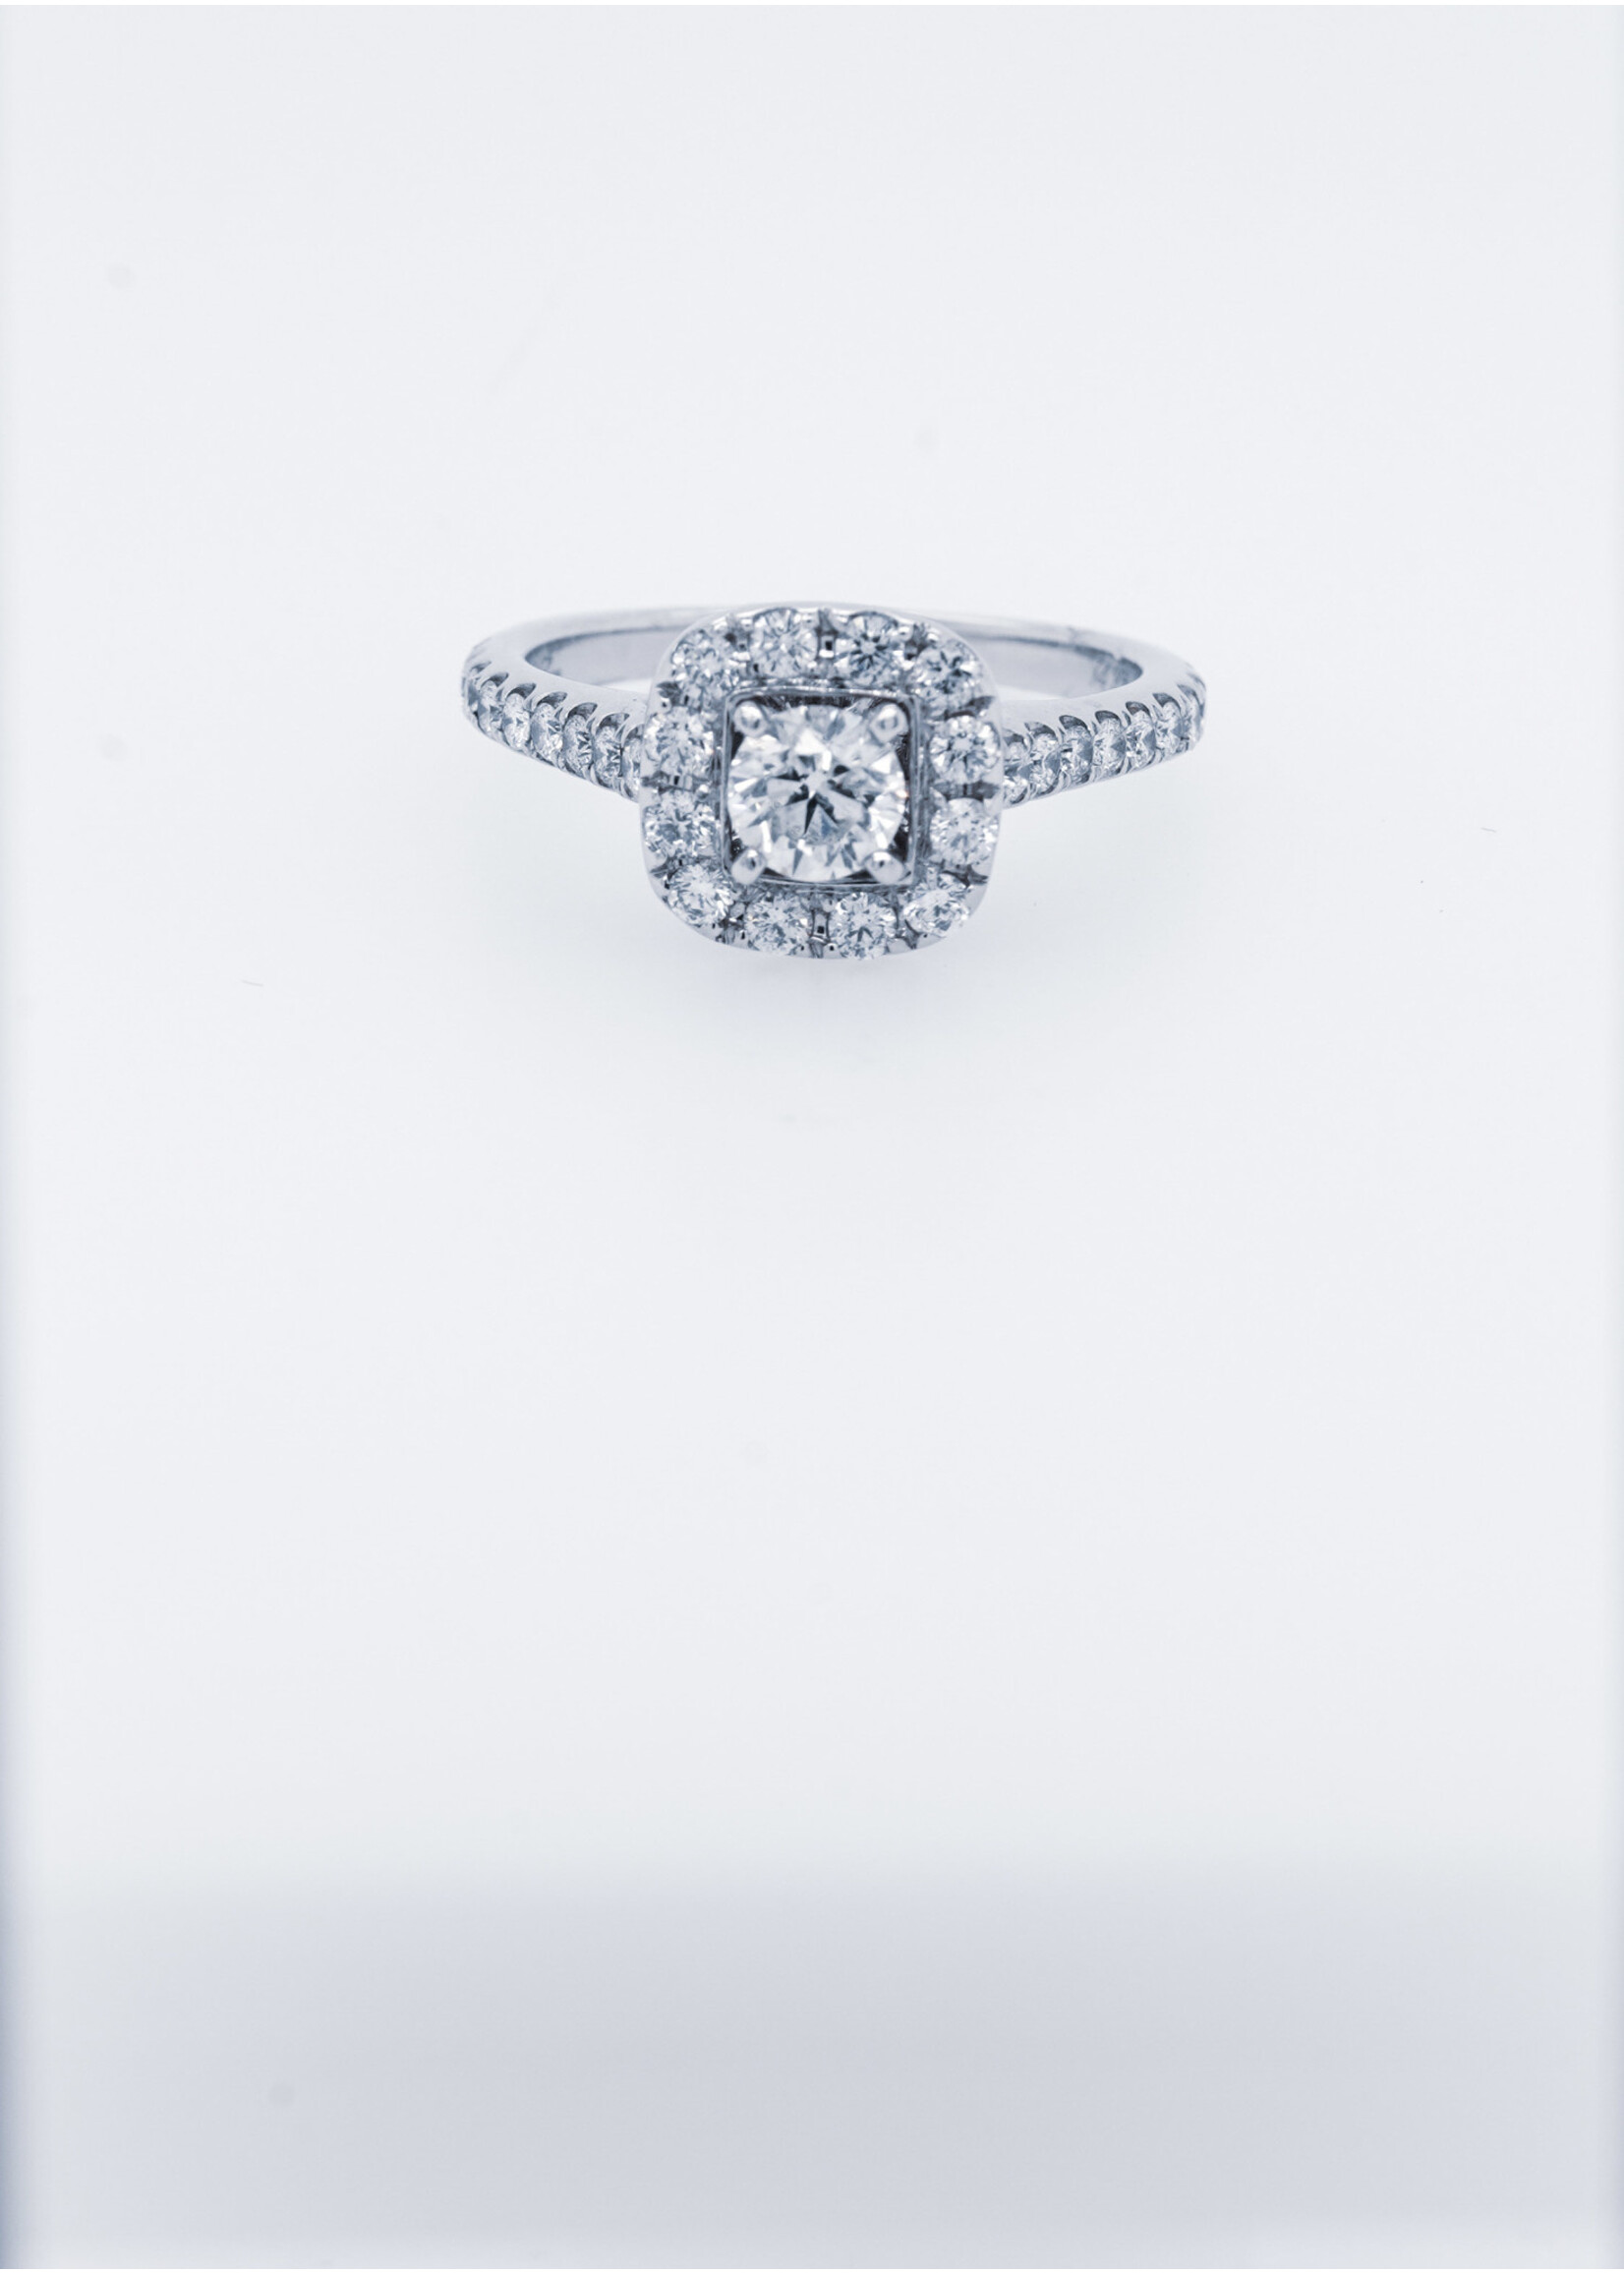 14KW 6.49g 1.00ctw (.50ctr) G/SI2 Round Diamond Neil Lane Halo Engagement Ring (size 6.5)